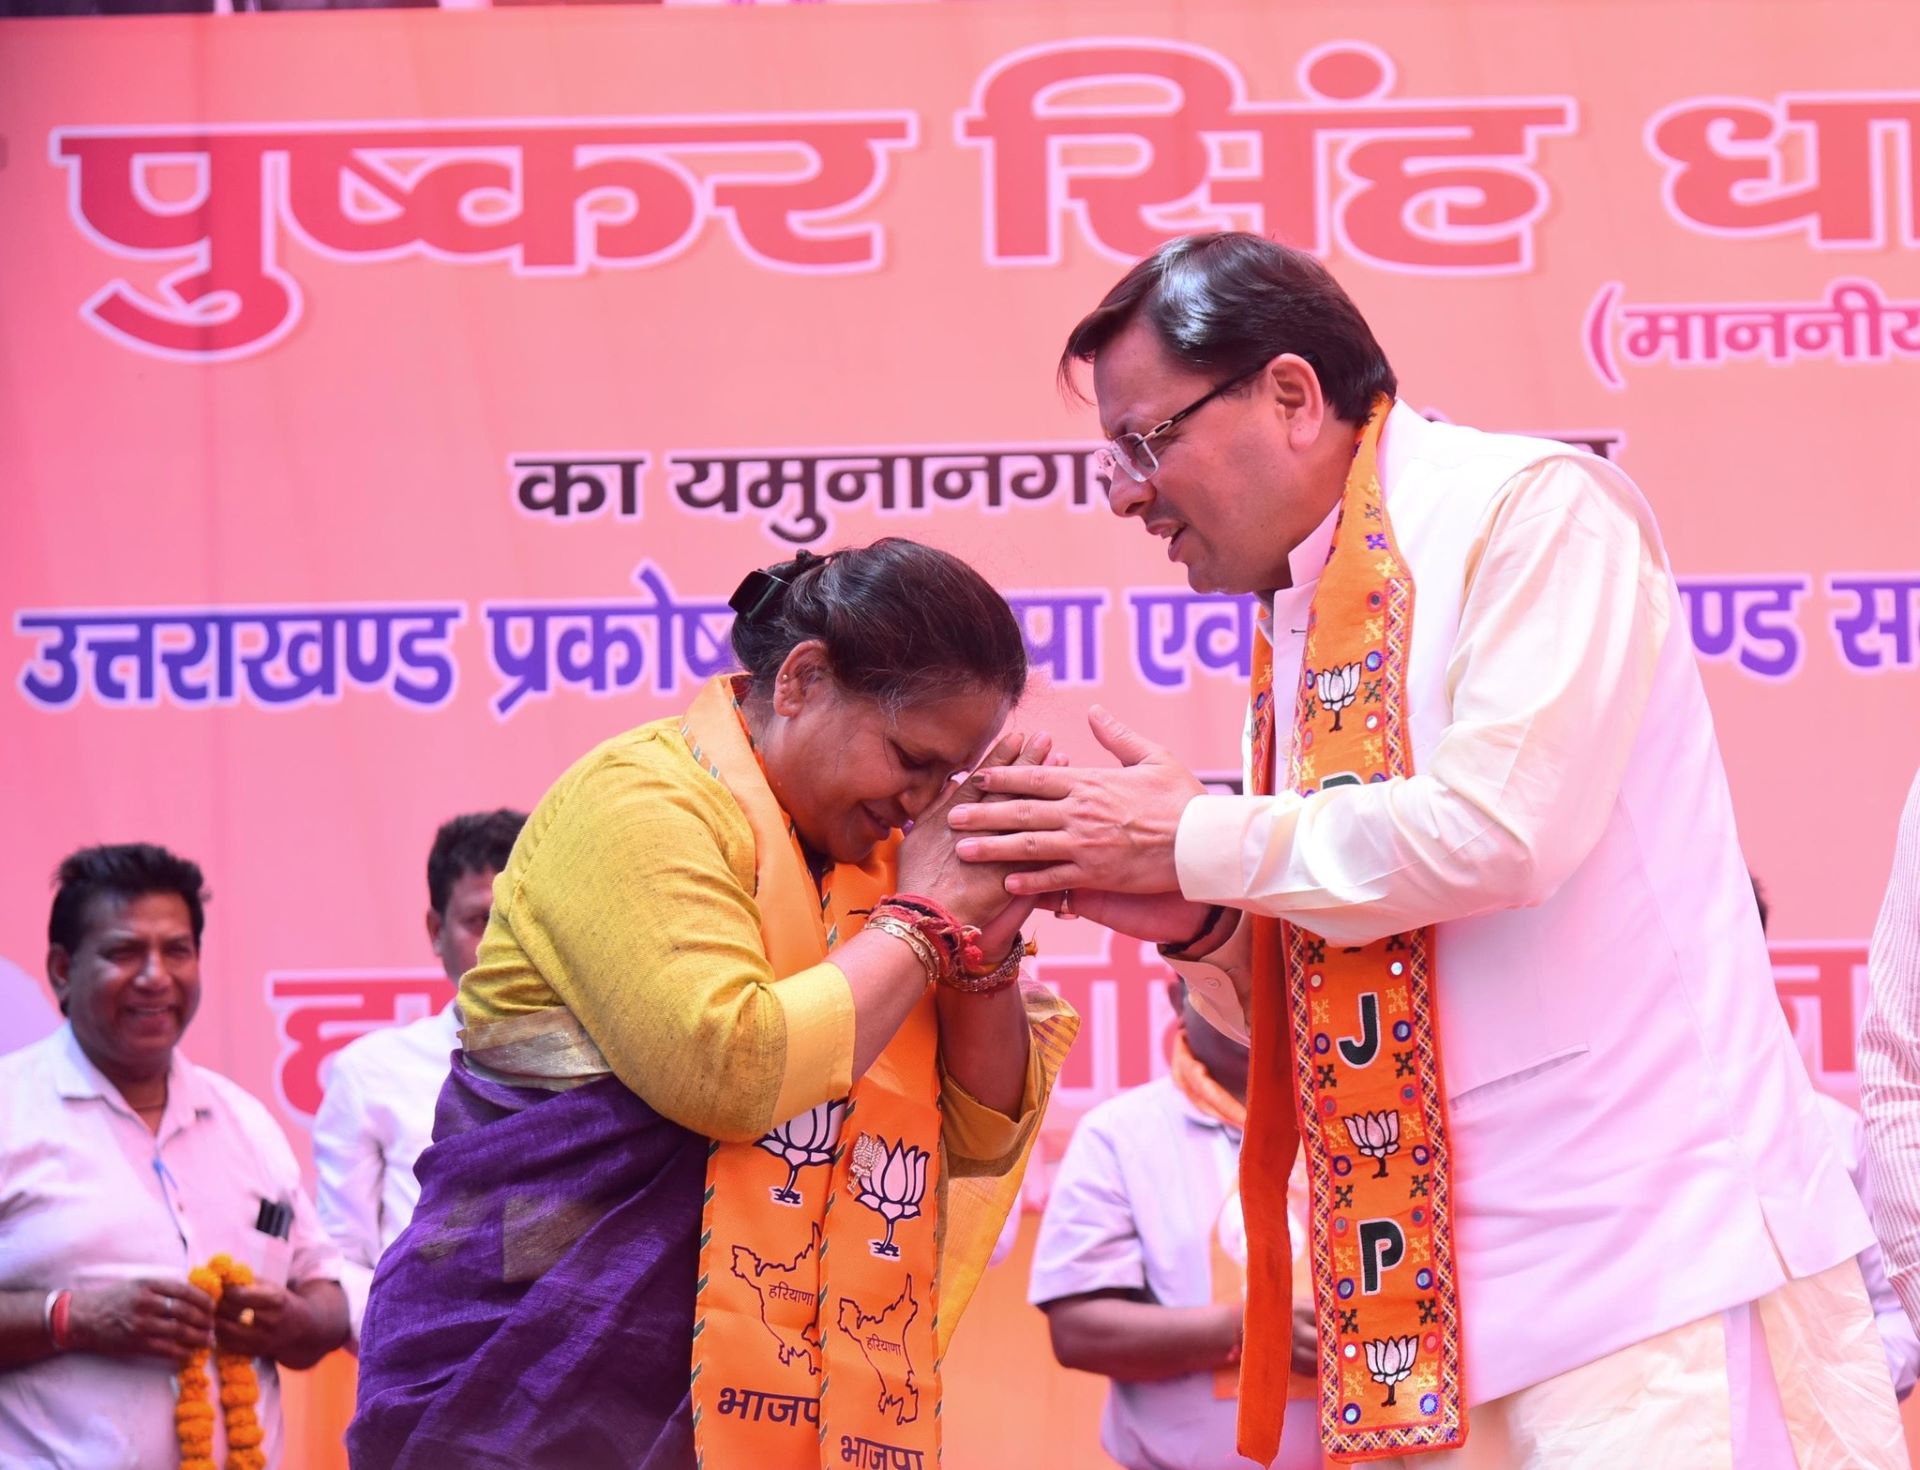 "Uttarakhand CM Boosts BJP Campaign in Haryana"